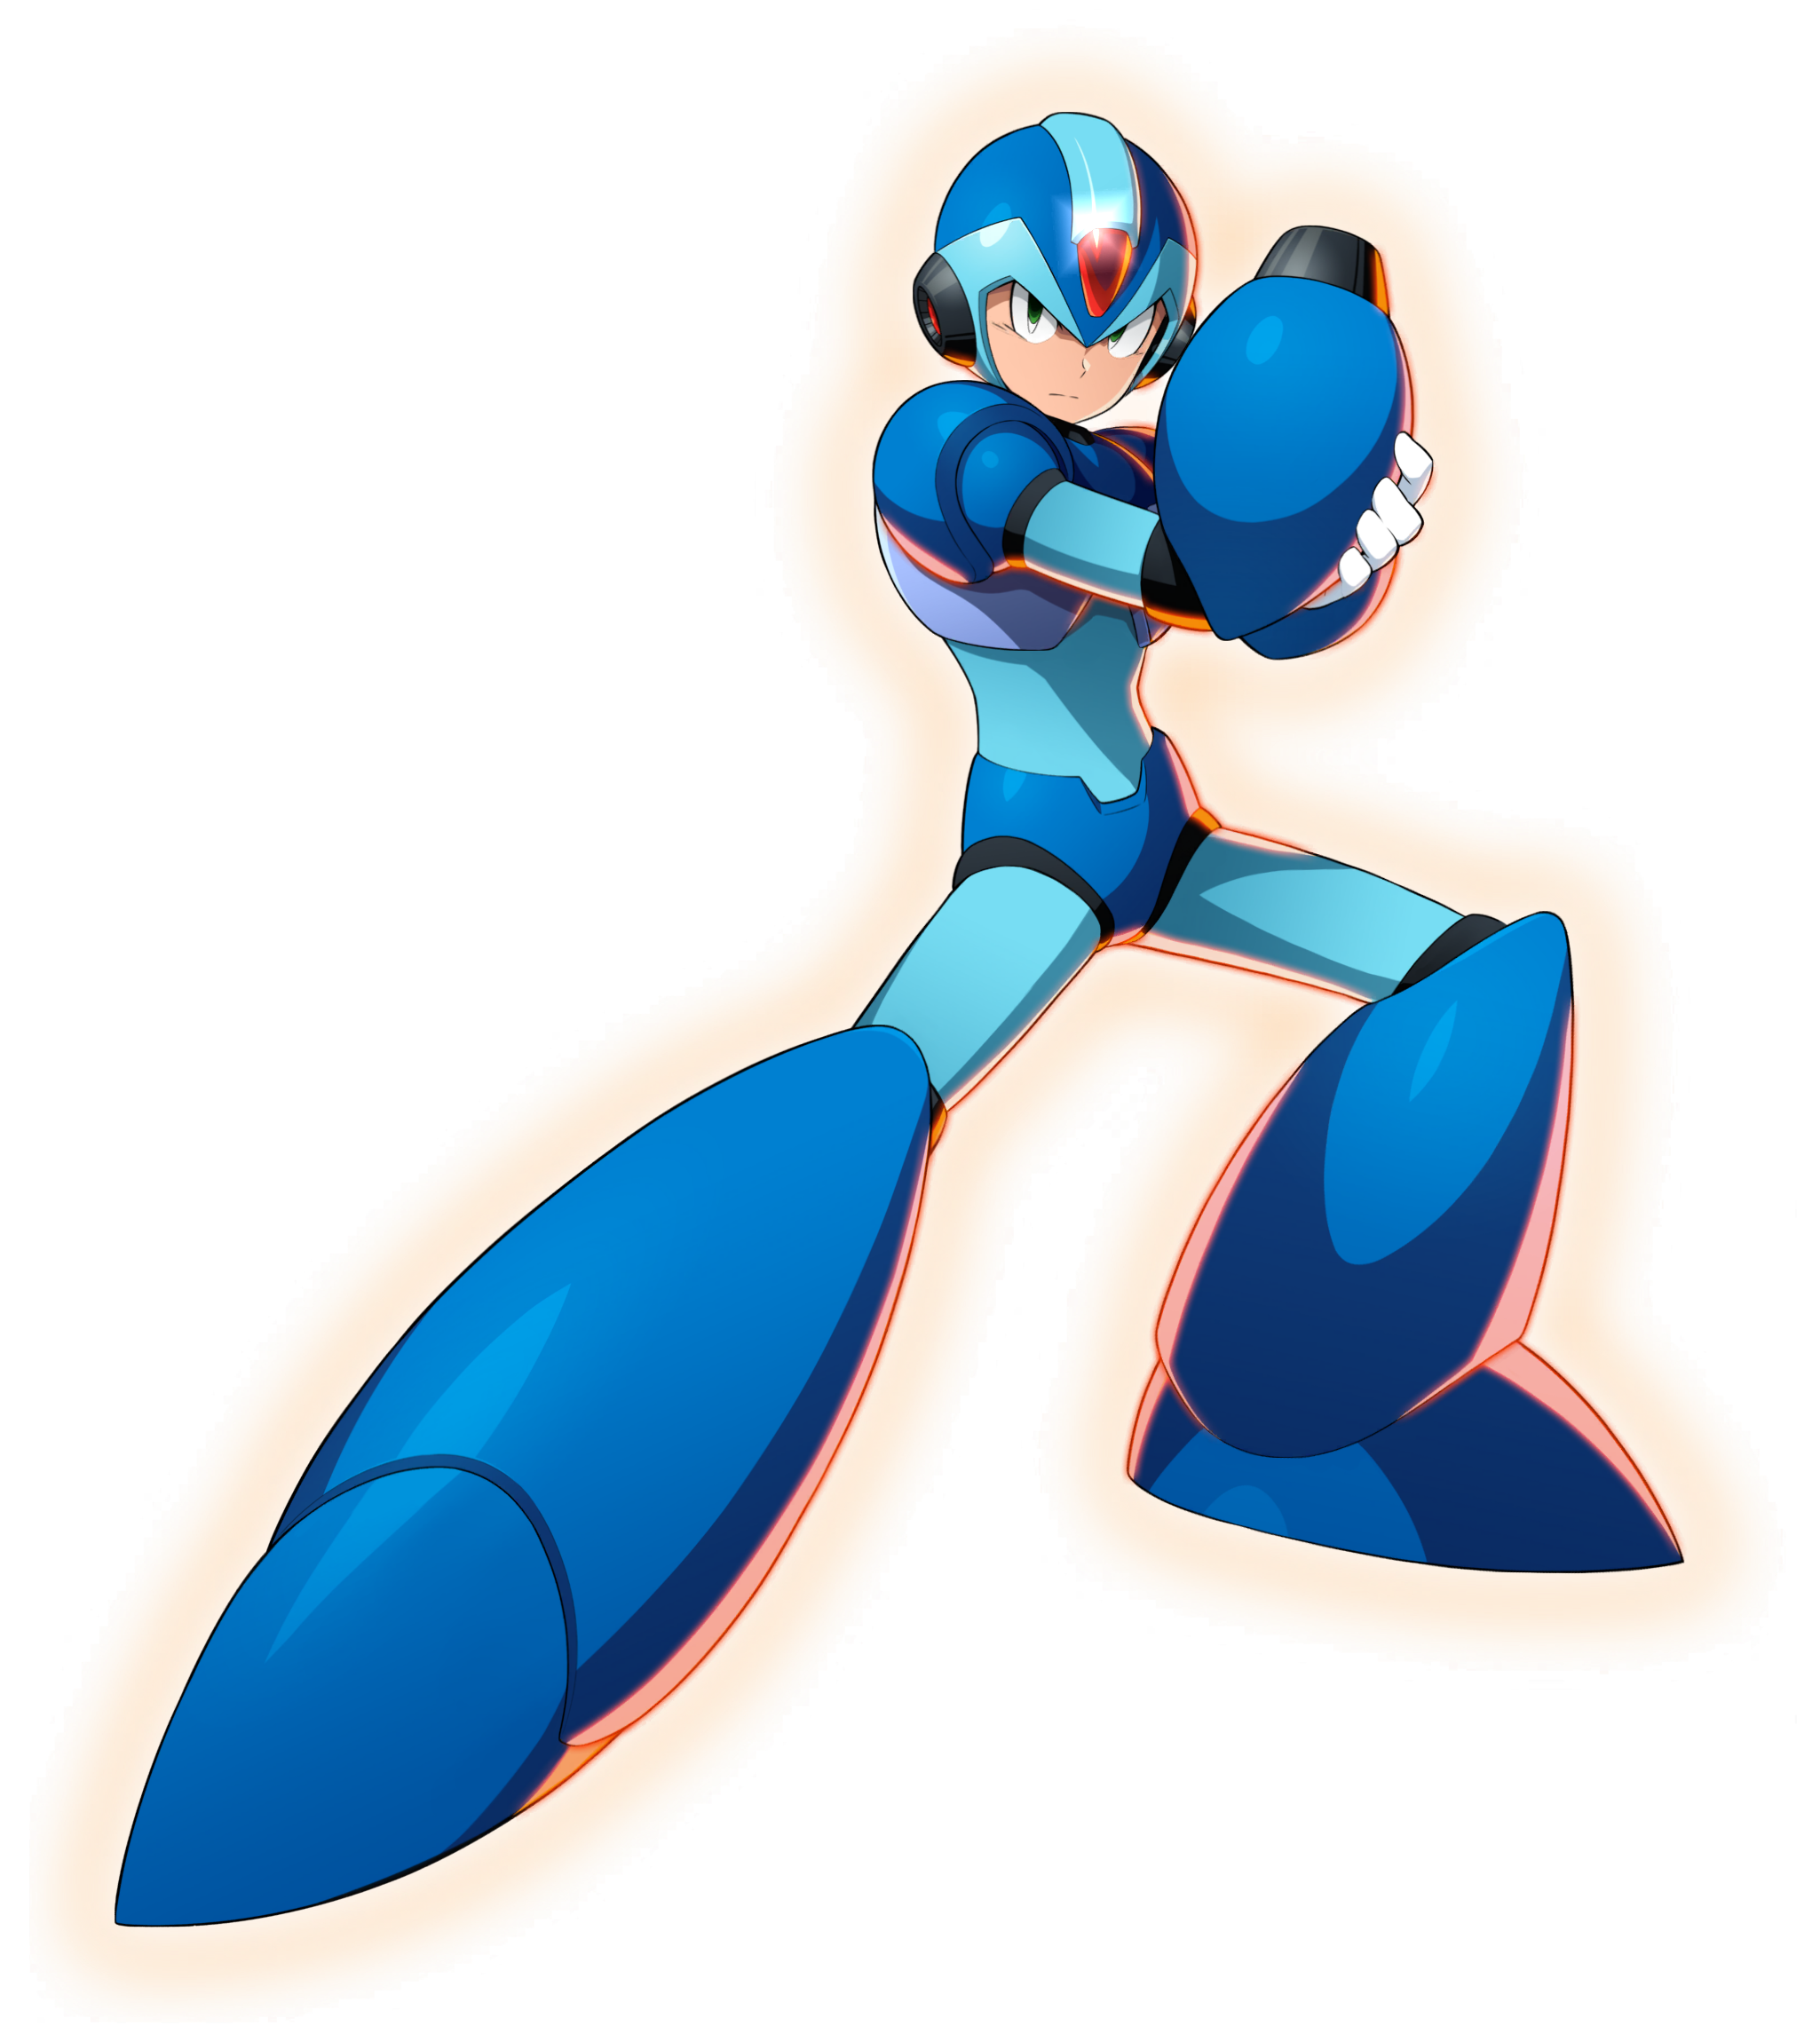 S-Class Hunter X, Rockman X DiVE / Mega Man X Dive Wiki